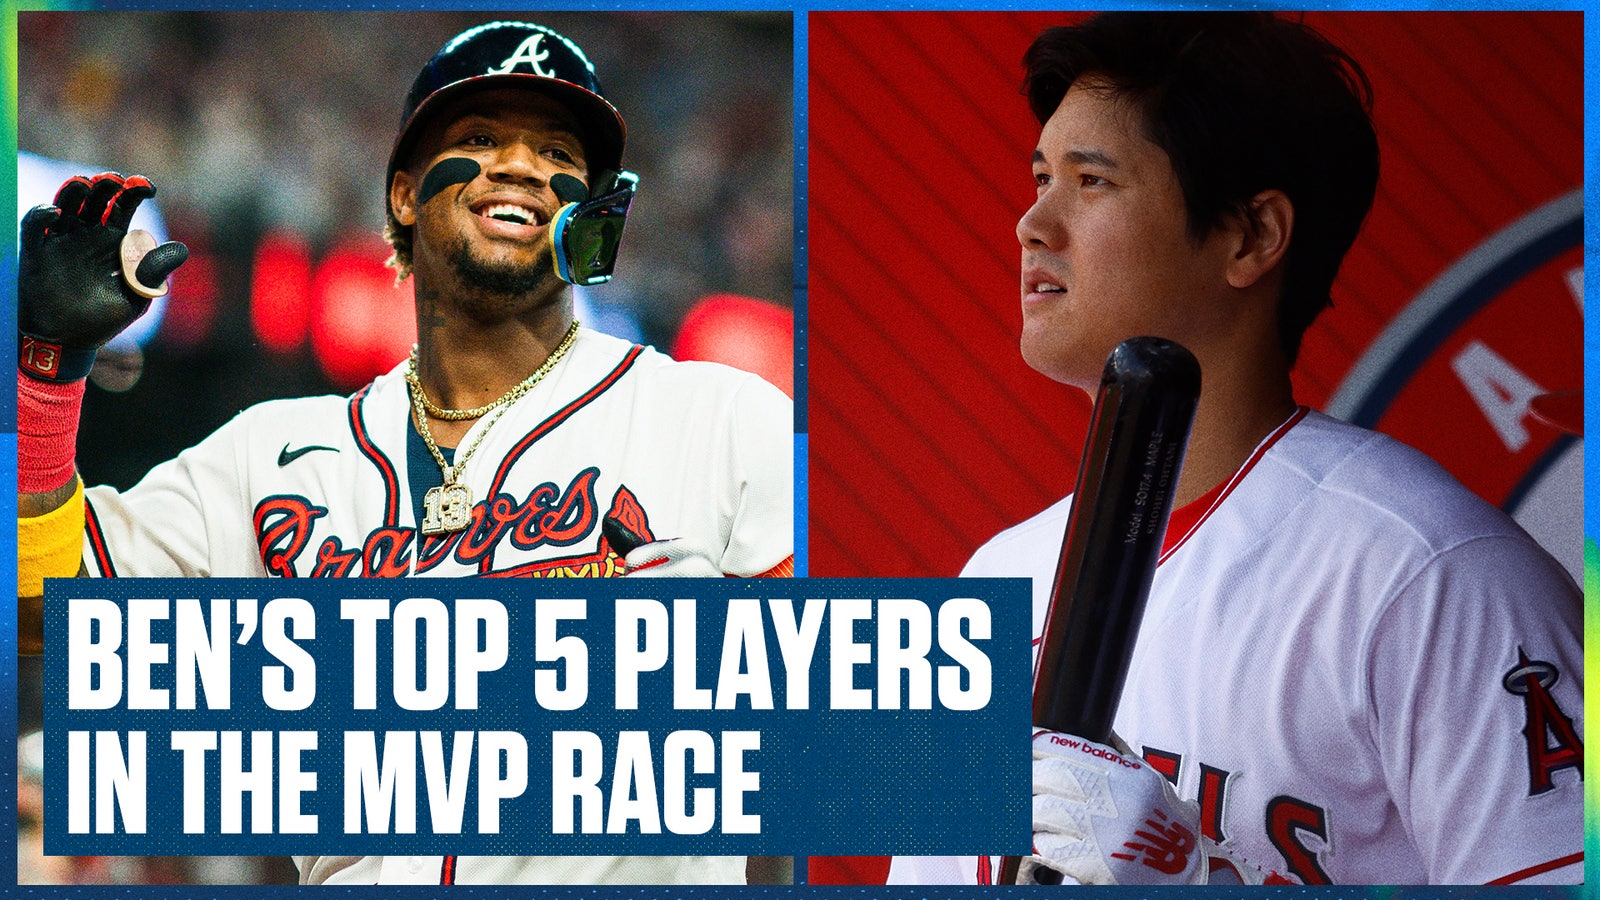 Shohei Ohtani & Ronald Acuna Jr. headline the Top 5 players in the BVPs